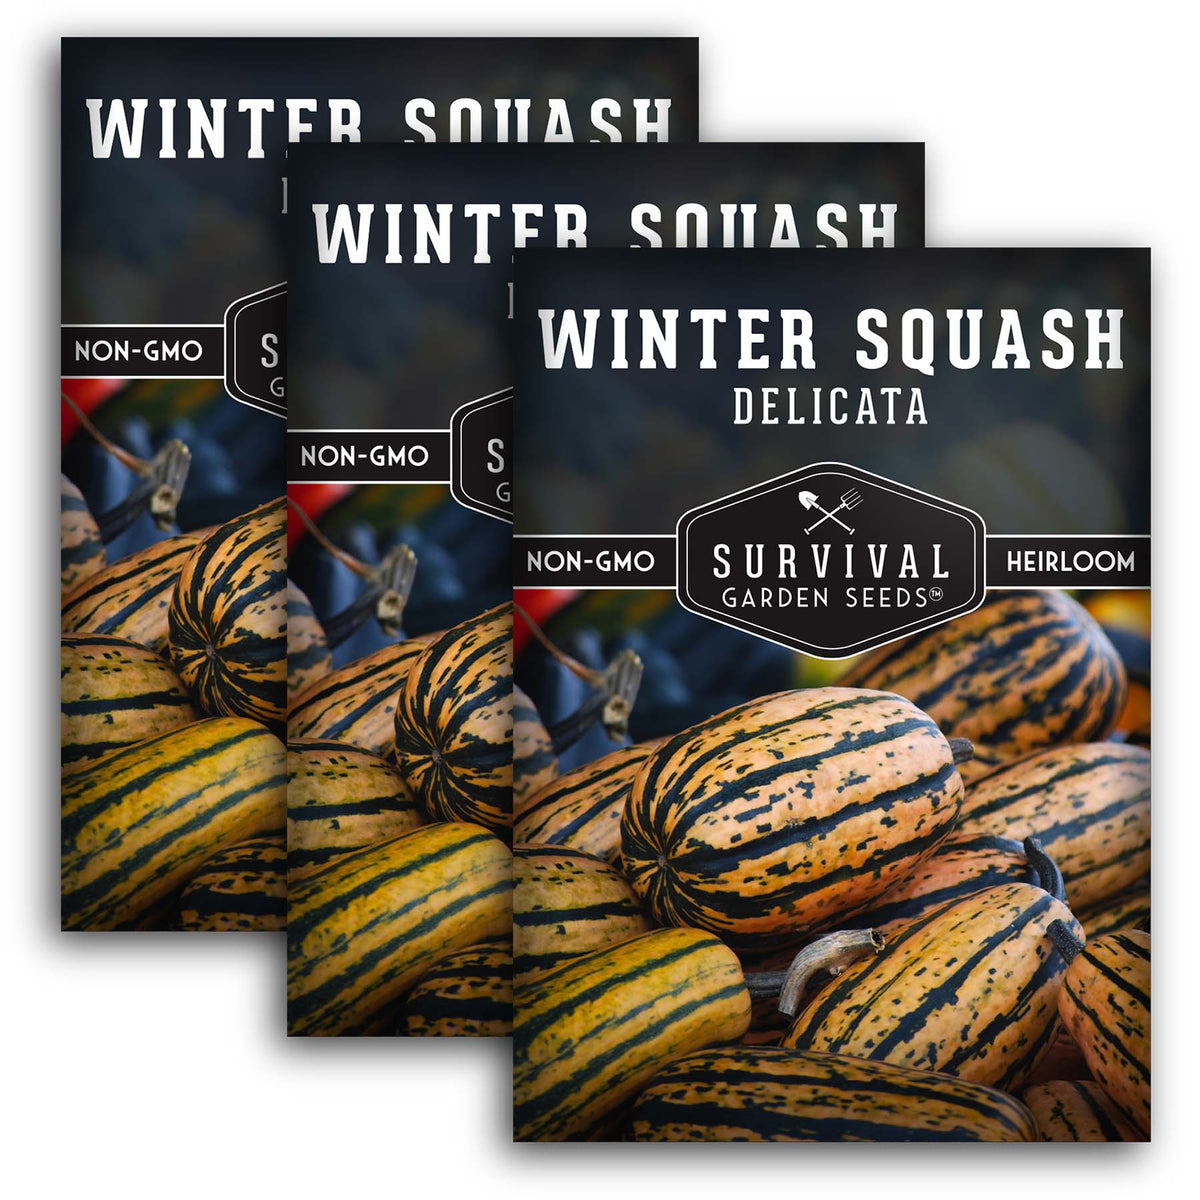 Delicata Winter Squash Seeds